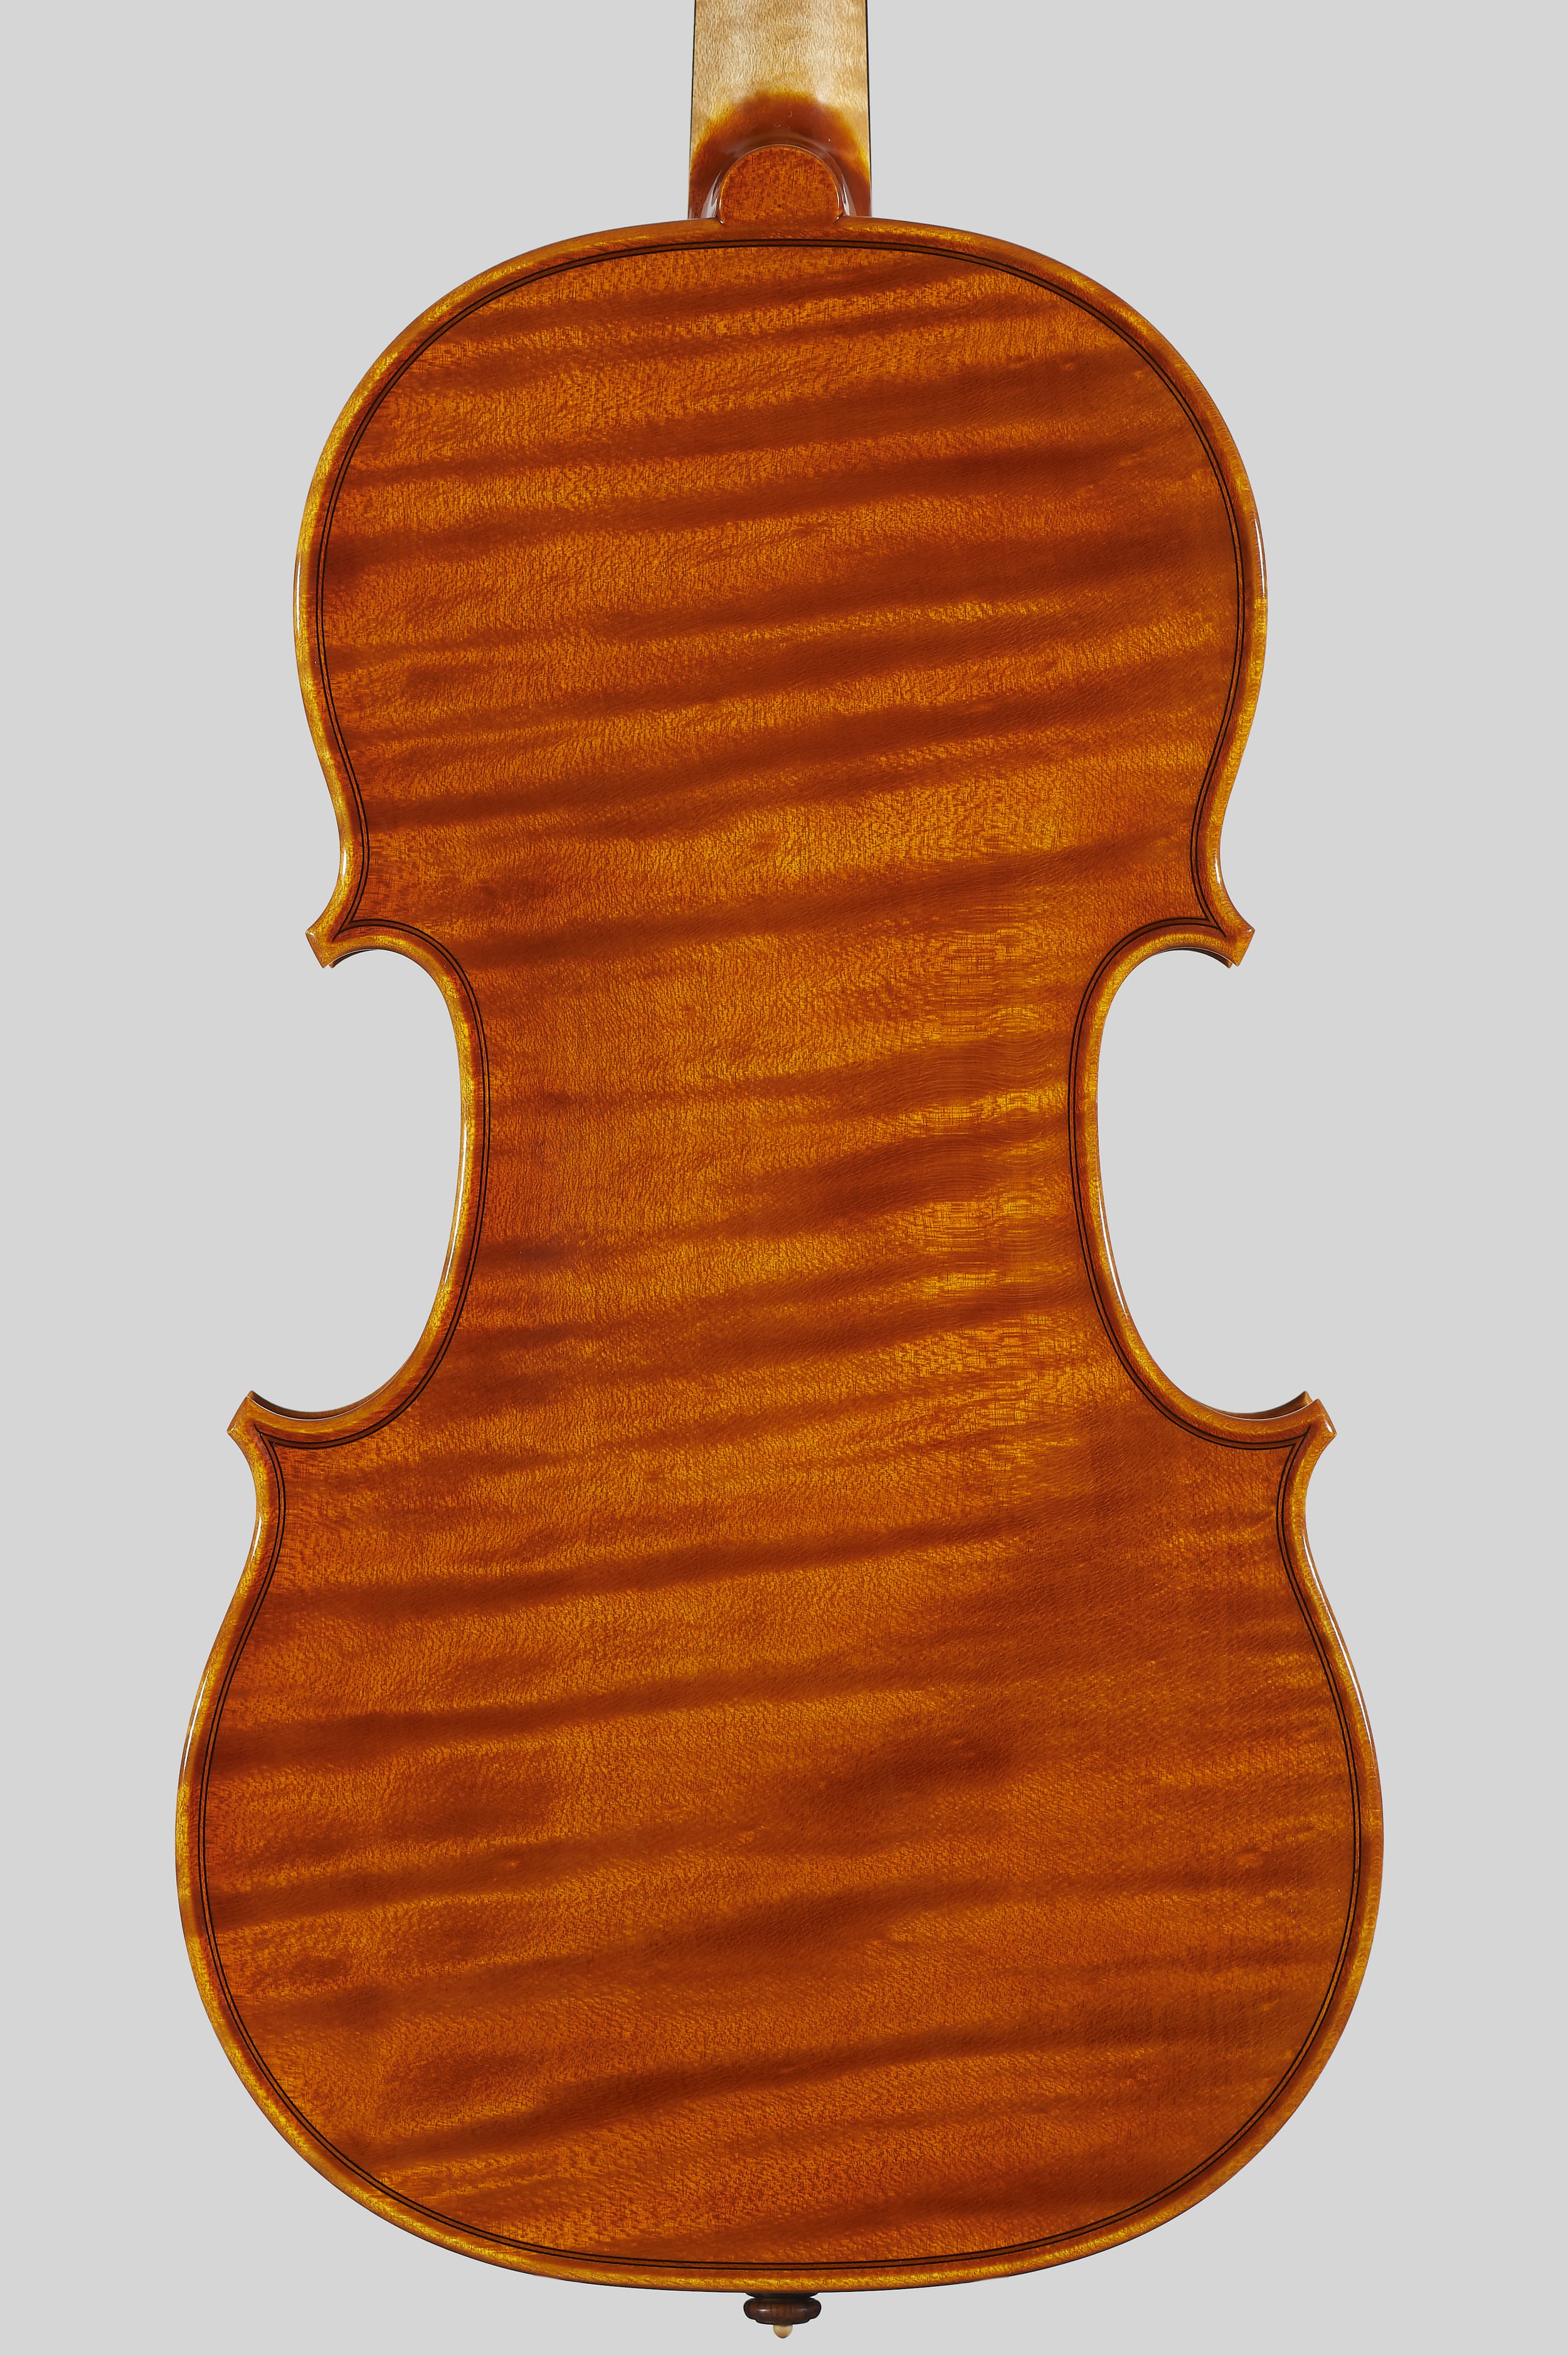 Anno 2018 – Violino modello stile A. Stradivari “Soil” 1714 - Fondo